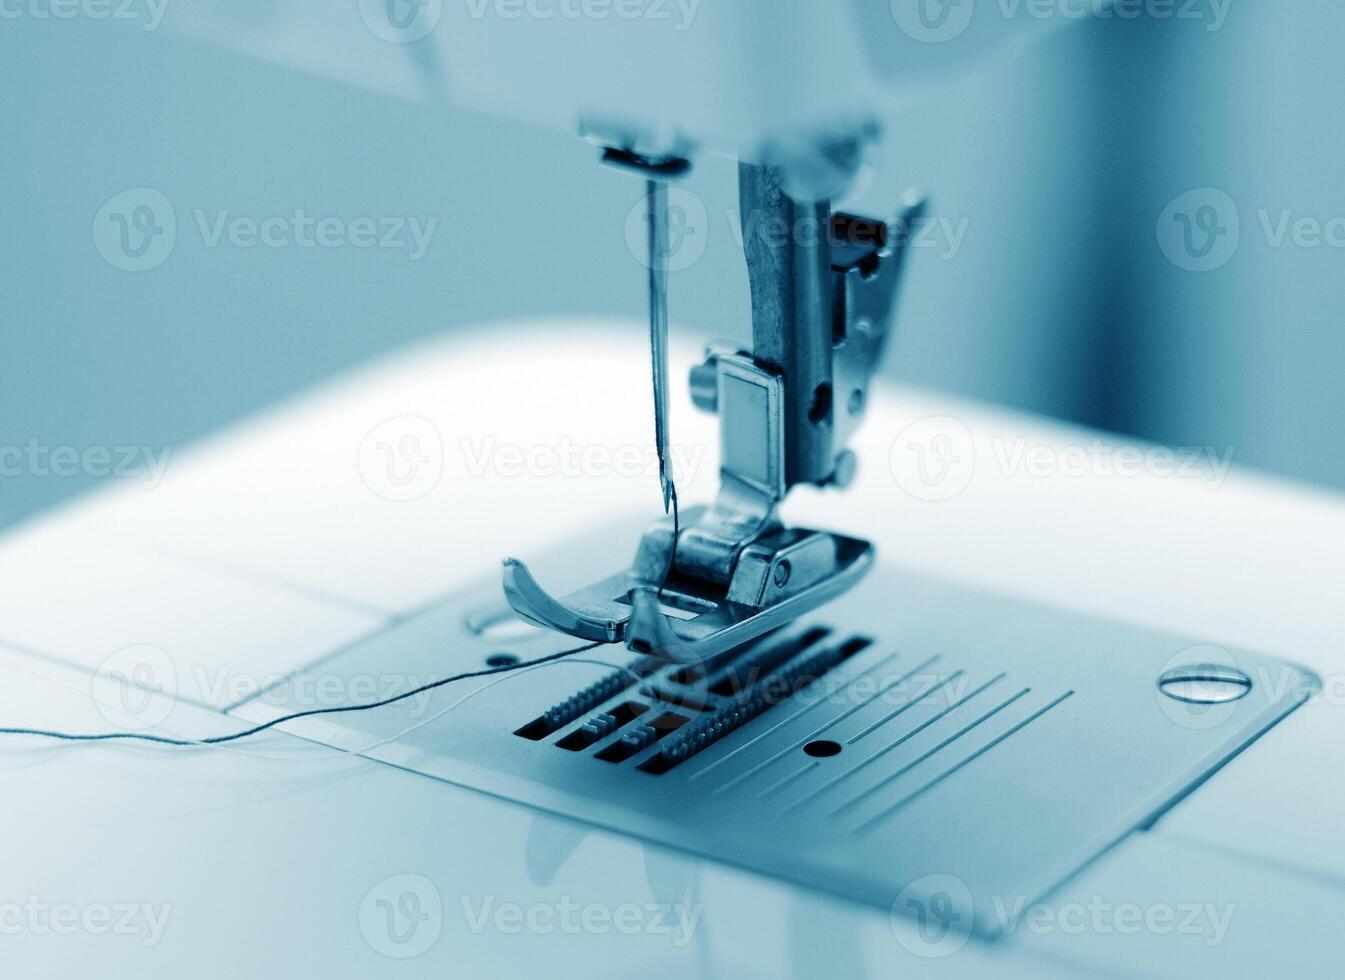 sewing machine closeup photo